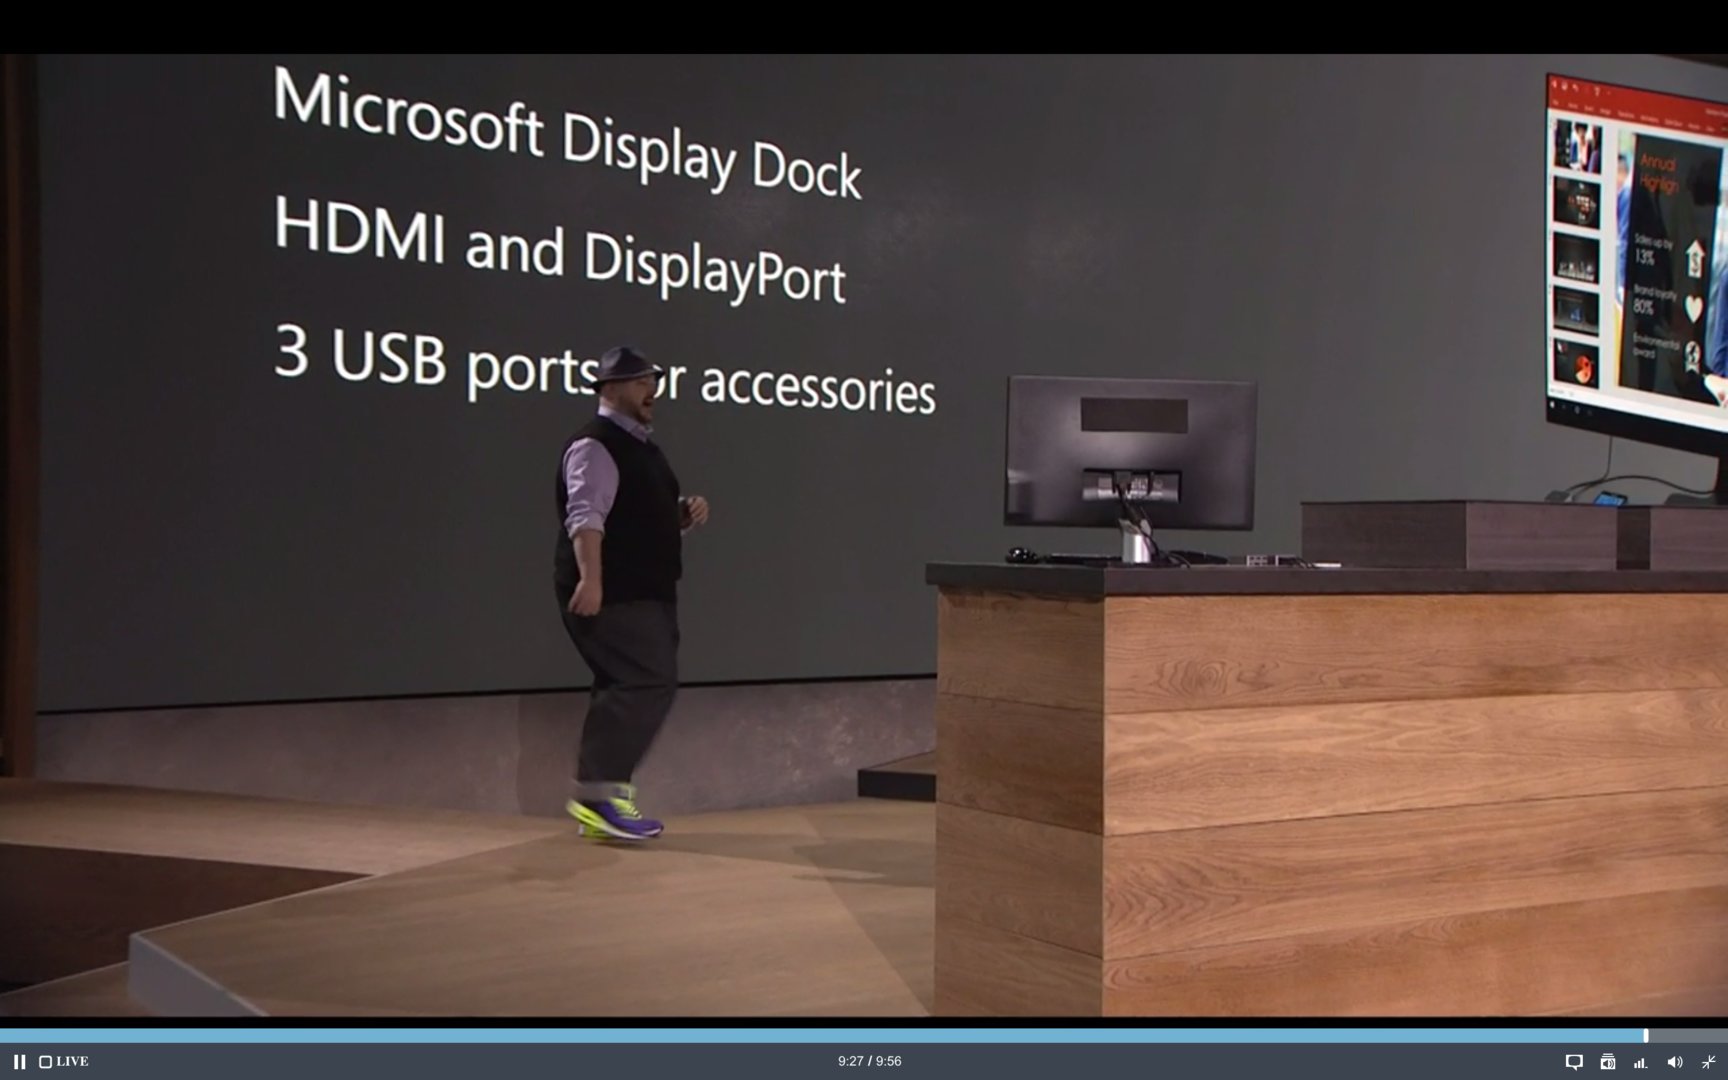 Microsoft Display Dock